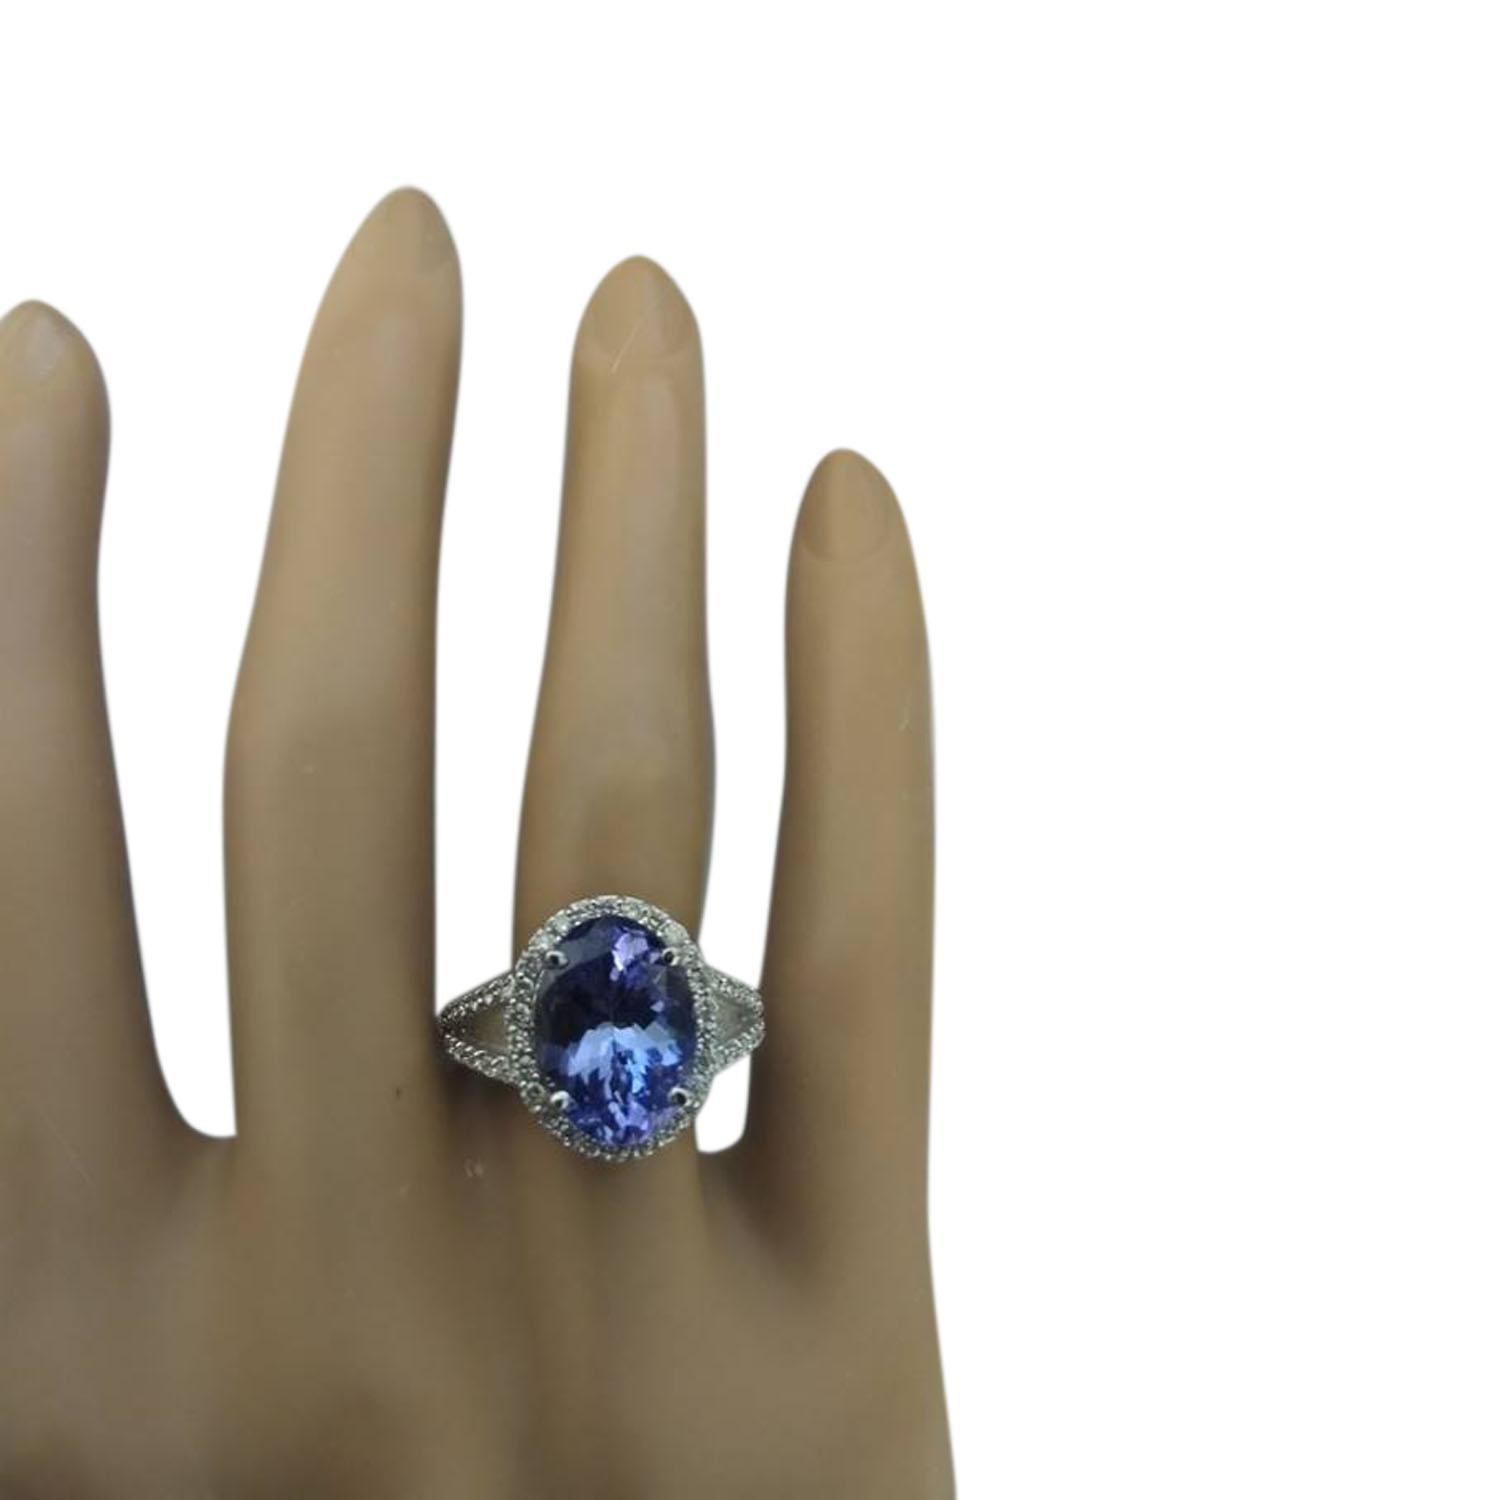 6.10 Carat Natural Tanzanite 14 Karat Solid White Gold Diamond Ring
Stamped: 14K 
Ring Size 7
Total Ring Weight: 6.1 Grams 
Tanzanite Weight 5.50 Carat (11.00x9.00 Millimeters)
Diamond Weight: 0.60 Carat (F-G Color, VS2-SI1 Clarity )
Face Measures: